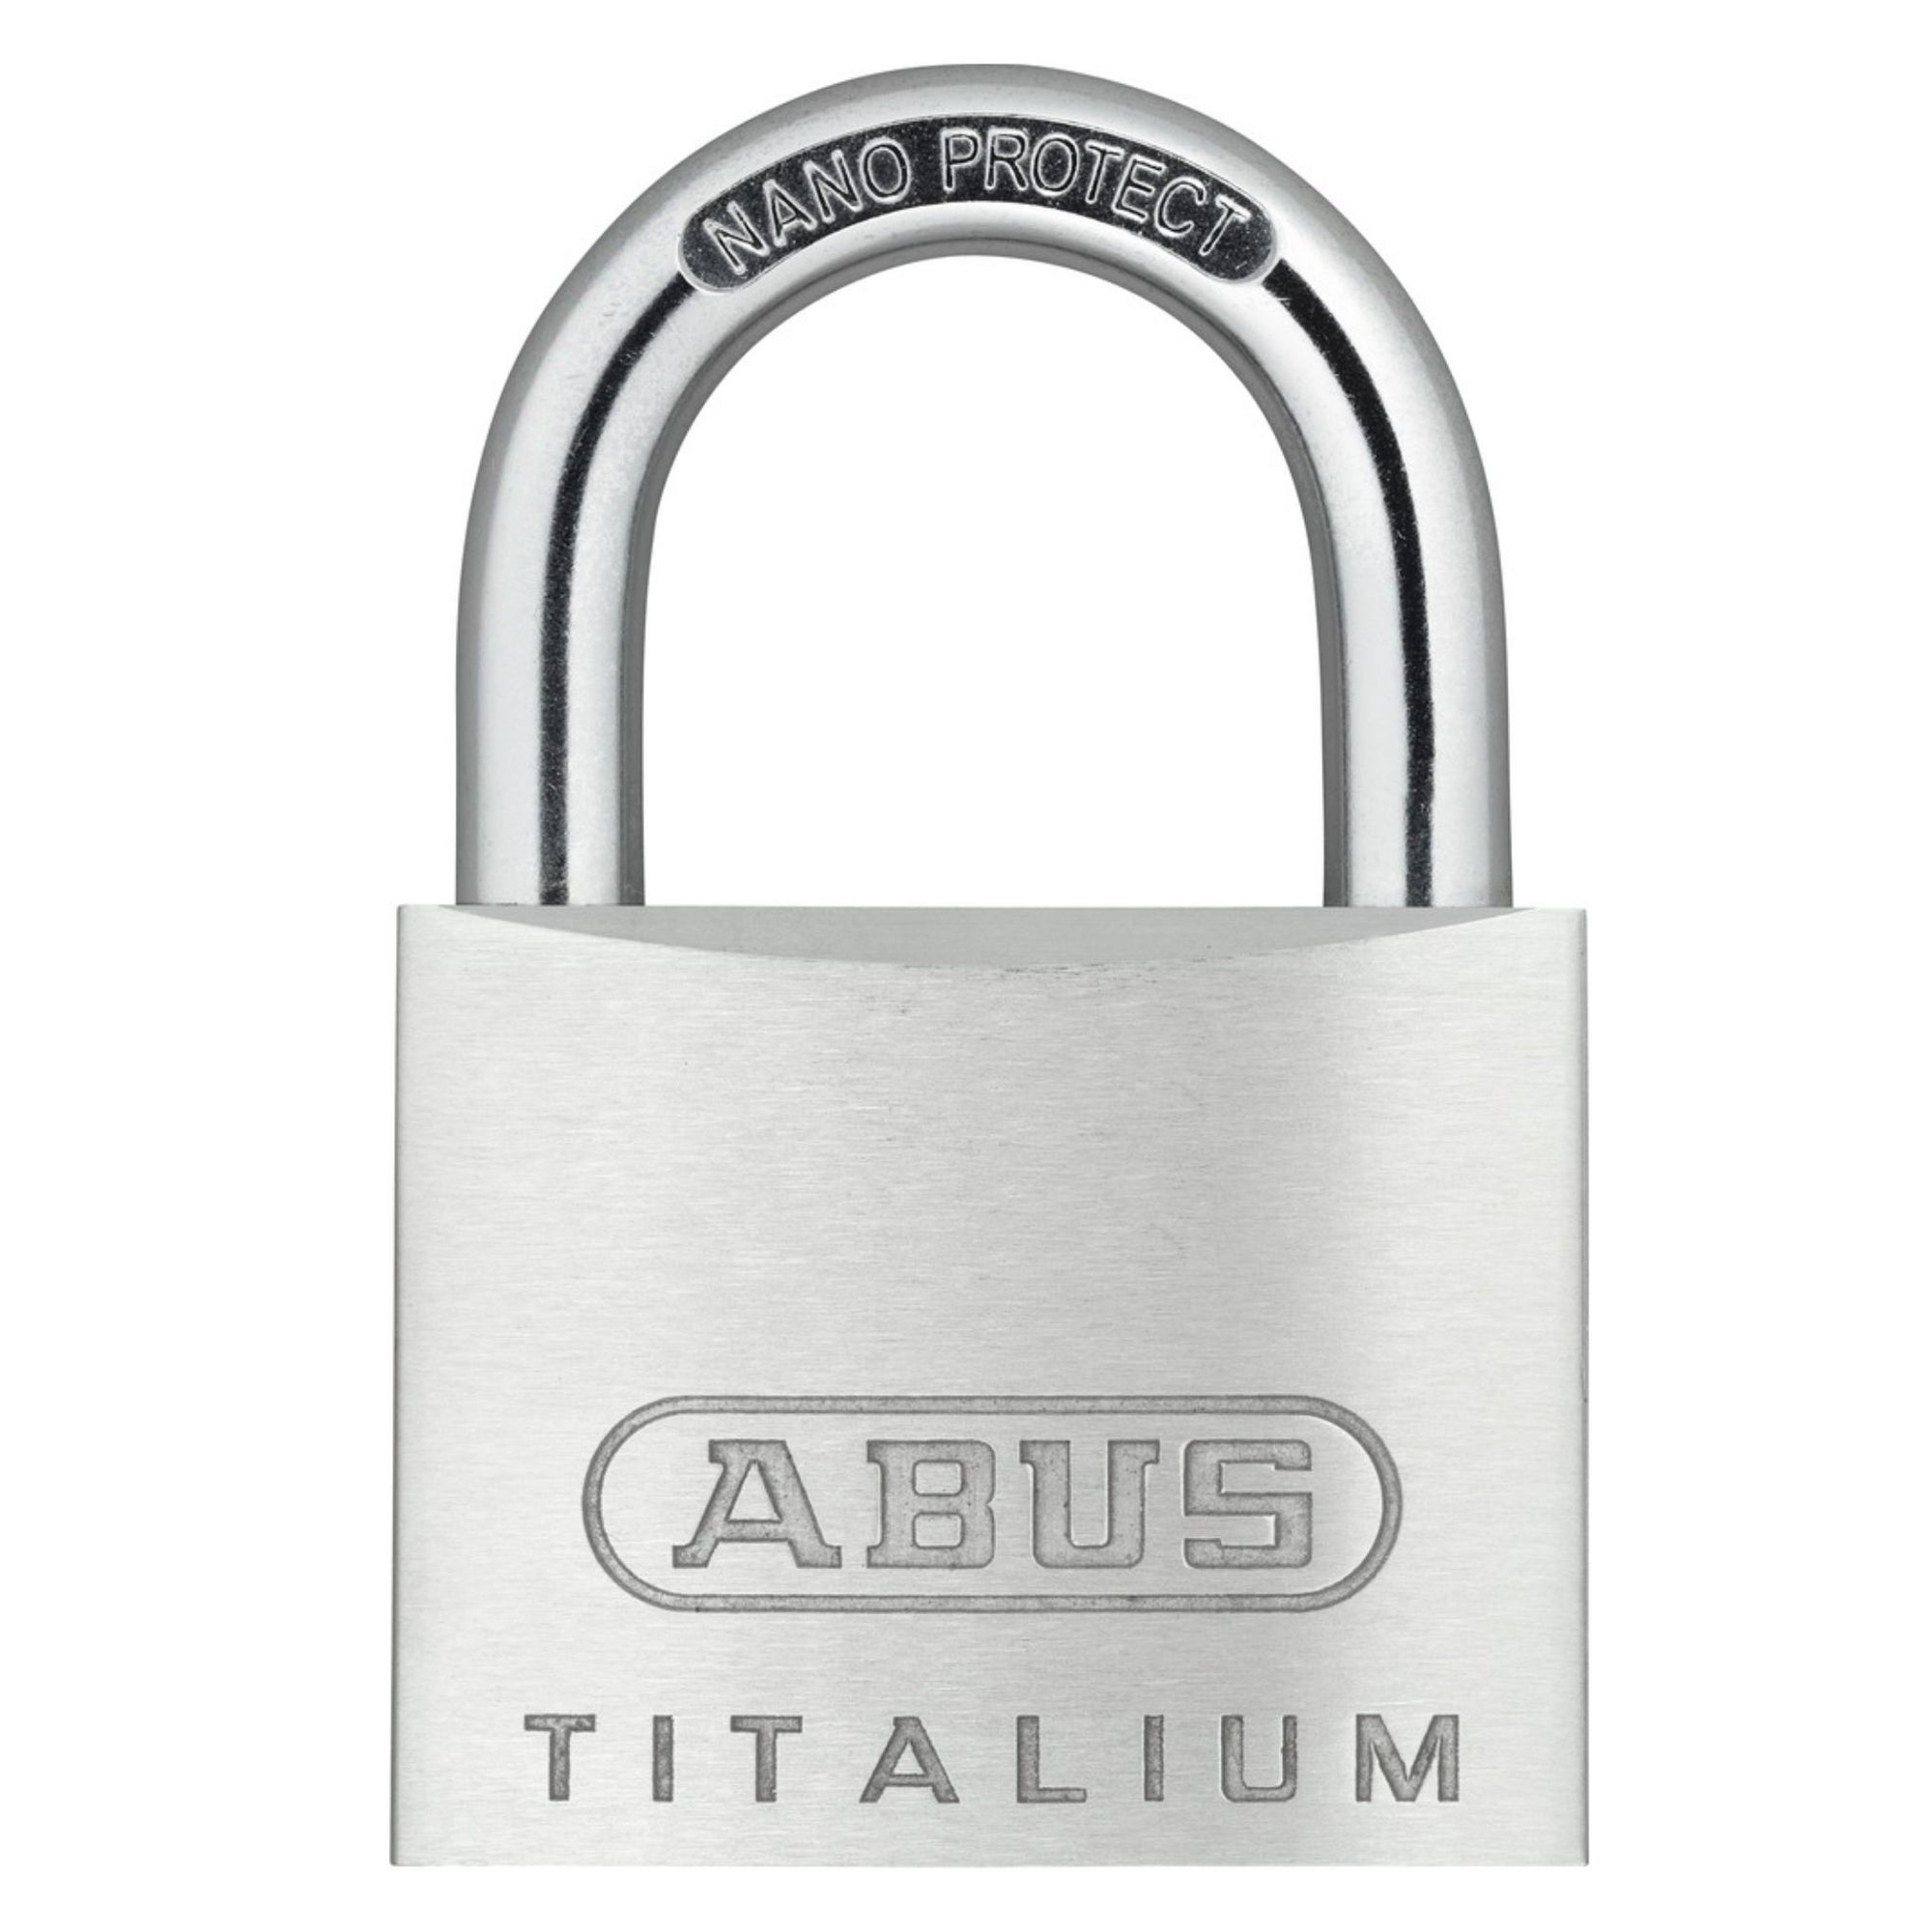 Abus 64TI/45 C KD Lock Keyed Different Titalium Padlocks Carded for Retail Display - The Lock Source